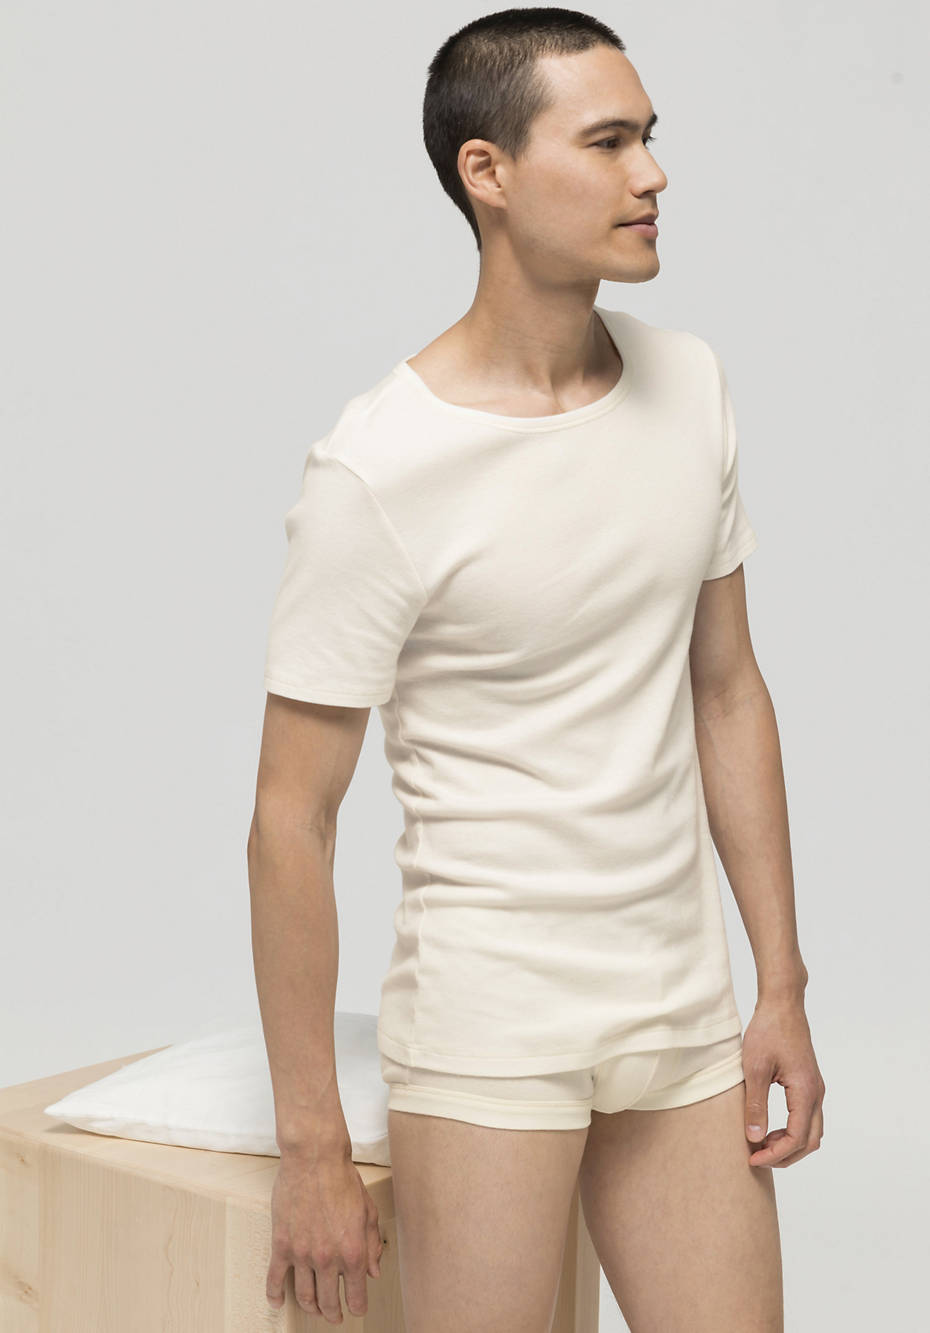 Shirt ModernNATURE made of pure organic cotton